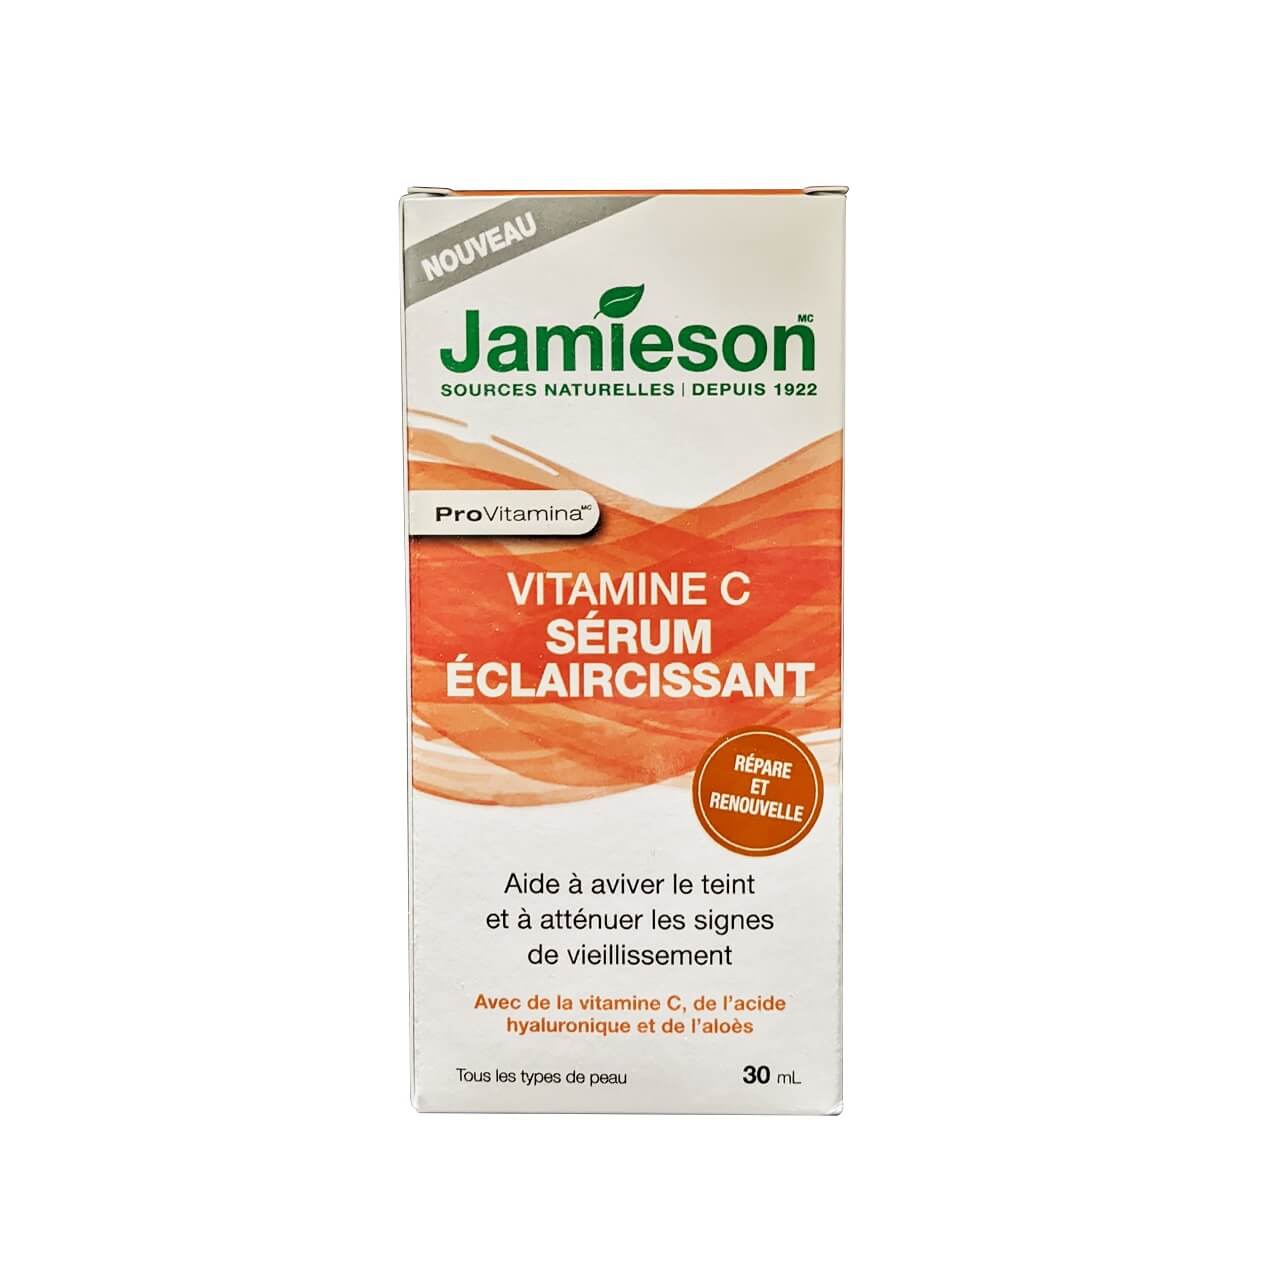 Product label for Jamieson ProVitamina Vitamin C Brightening Serum (30 mL) in French